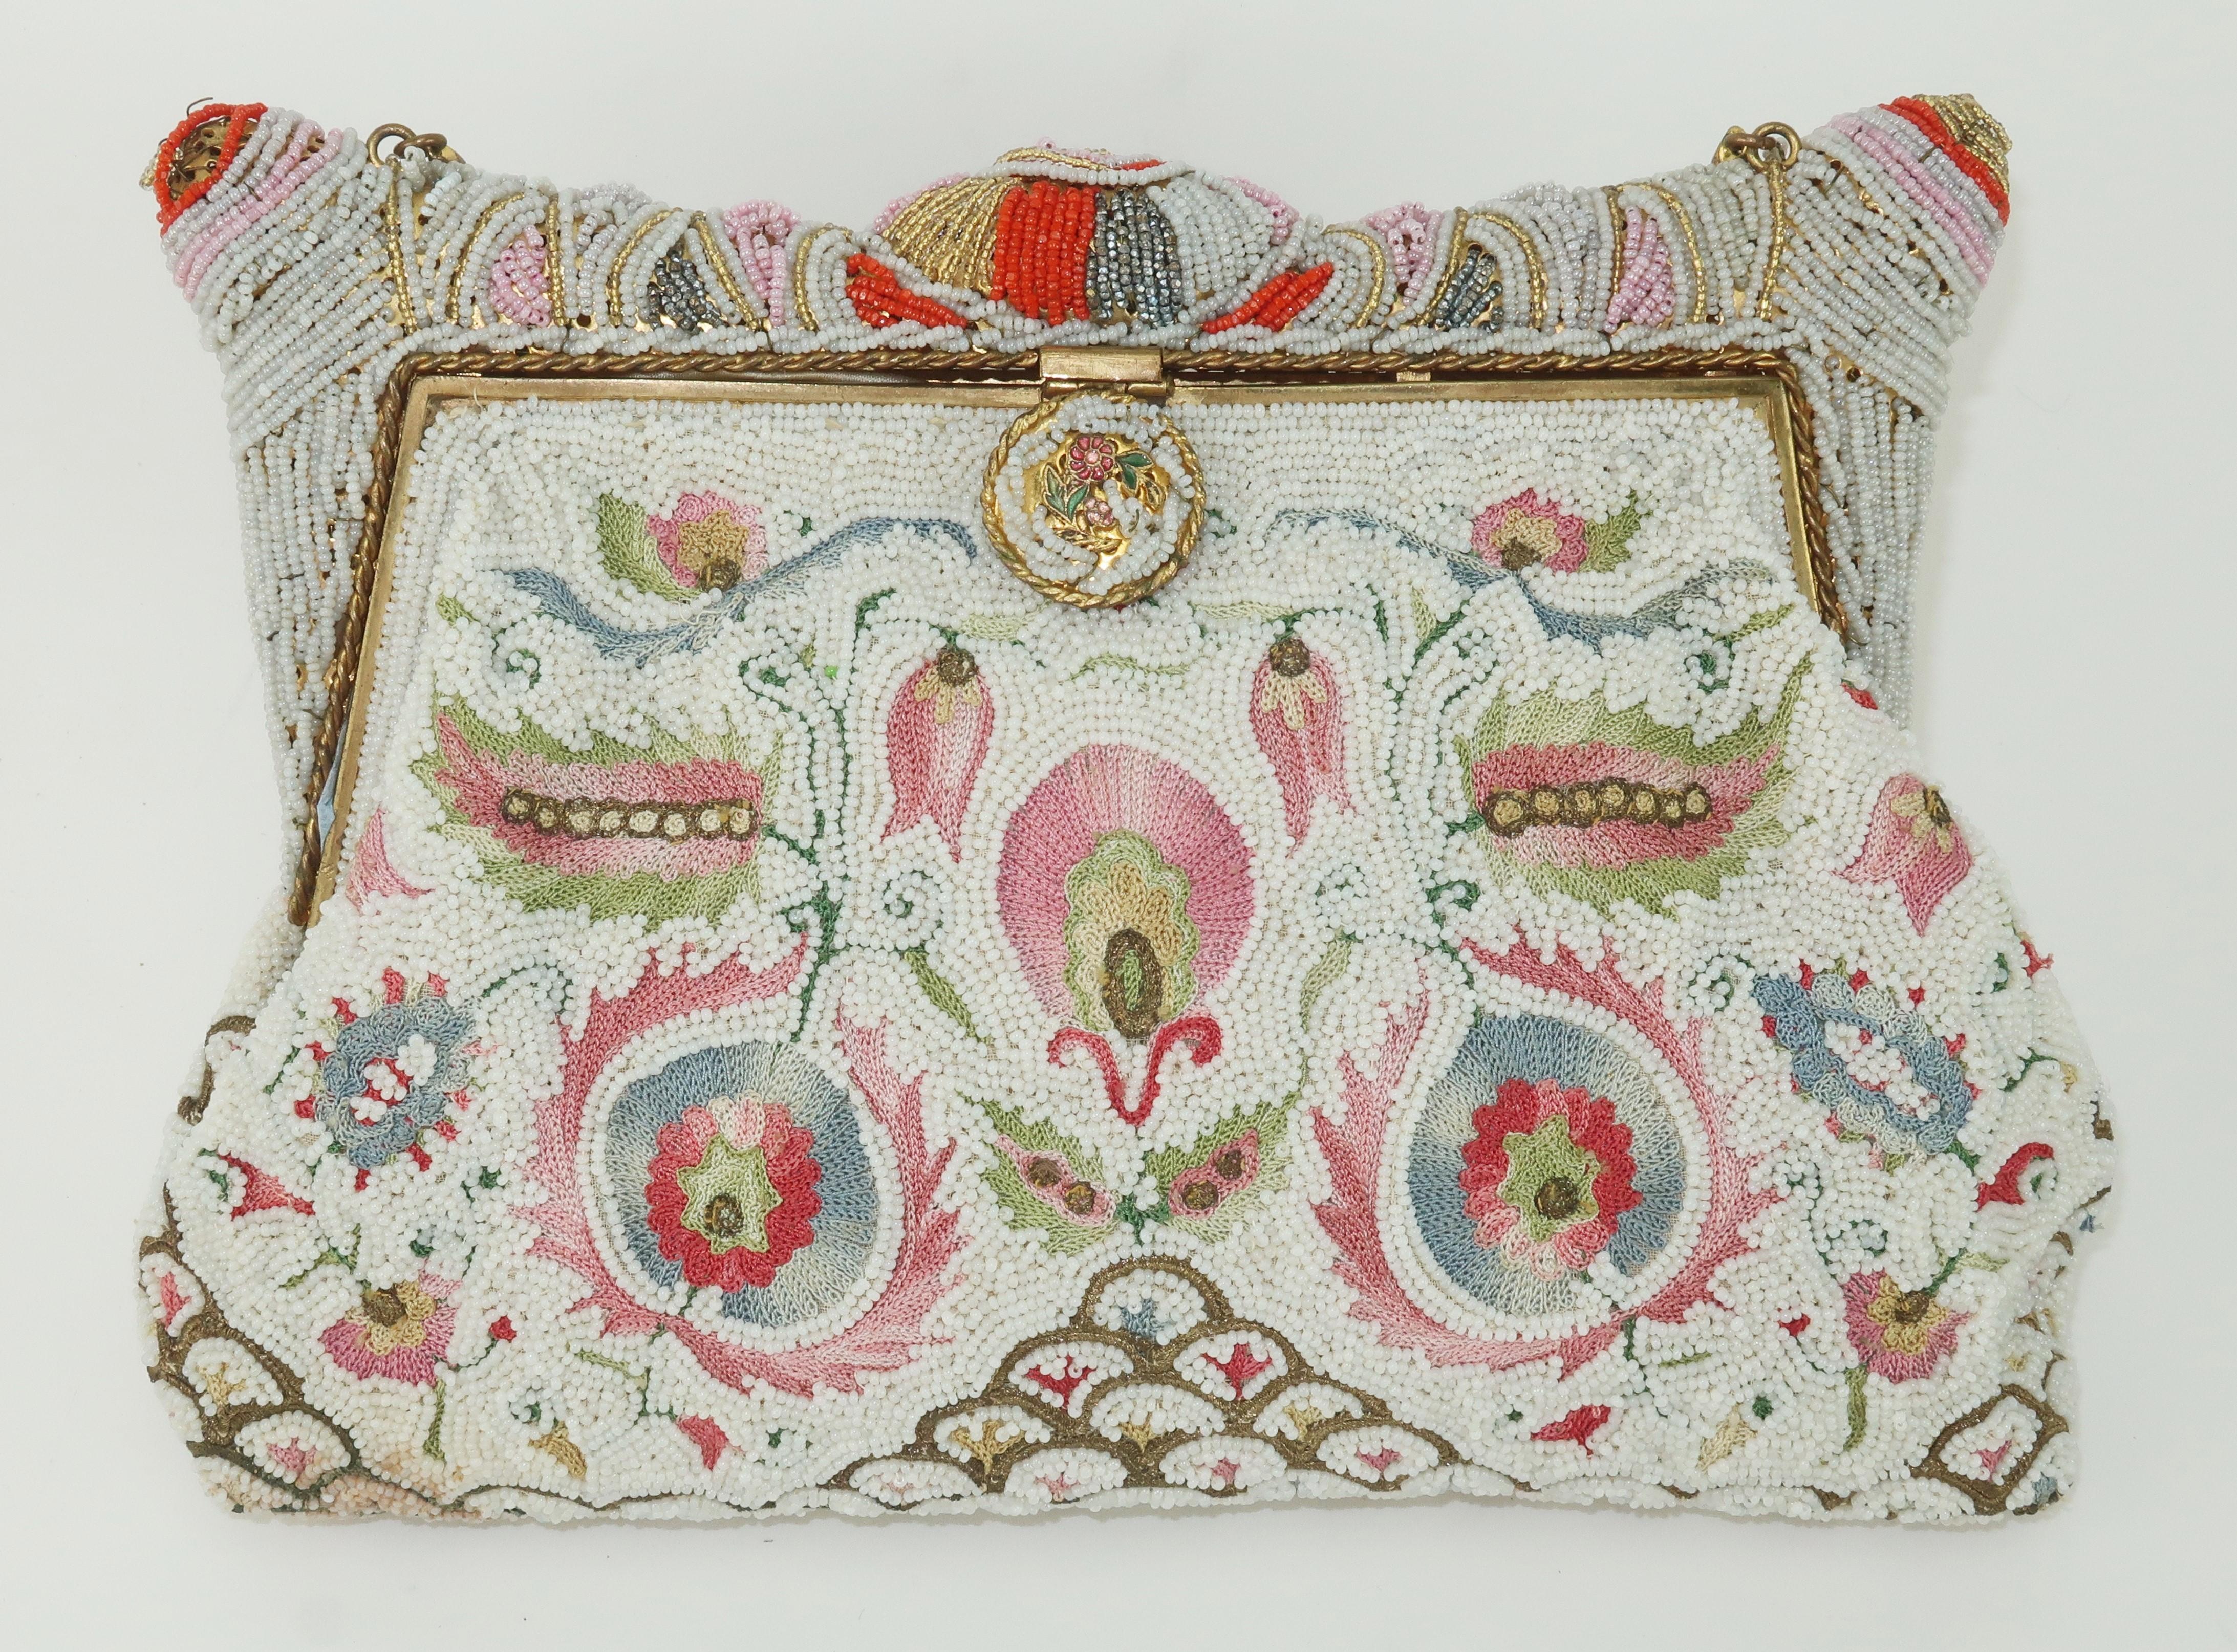 Women's Pagoda Shaped Beaded & Embroidered Evening Handbag, 1950's